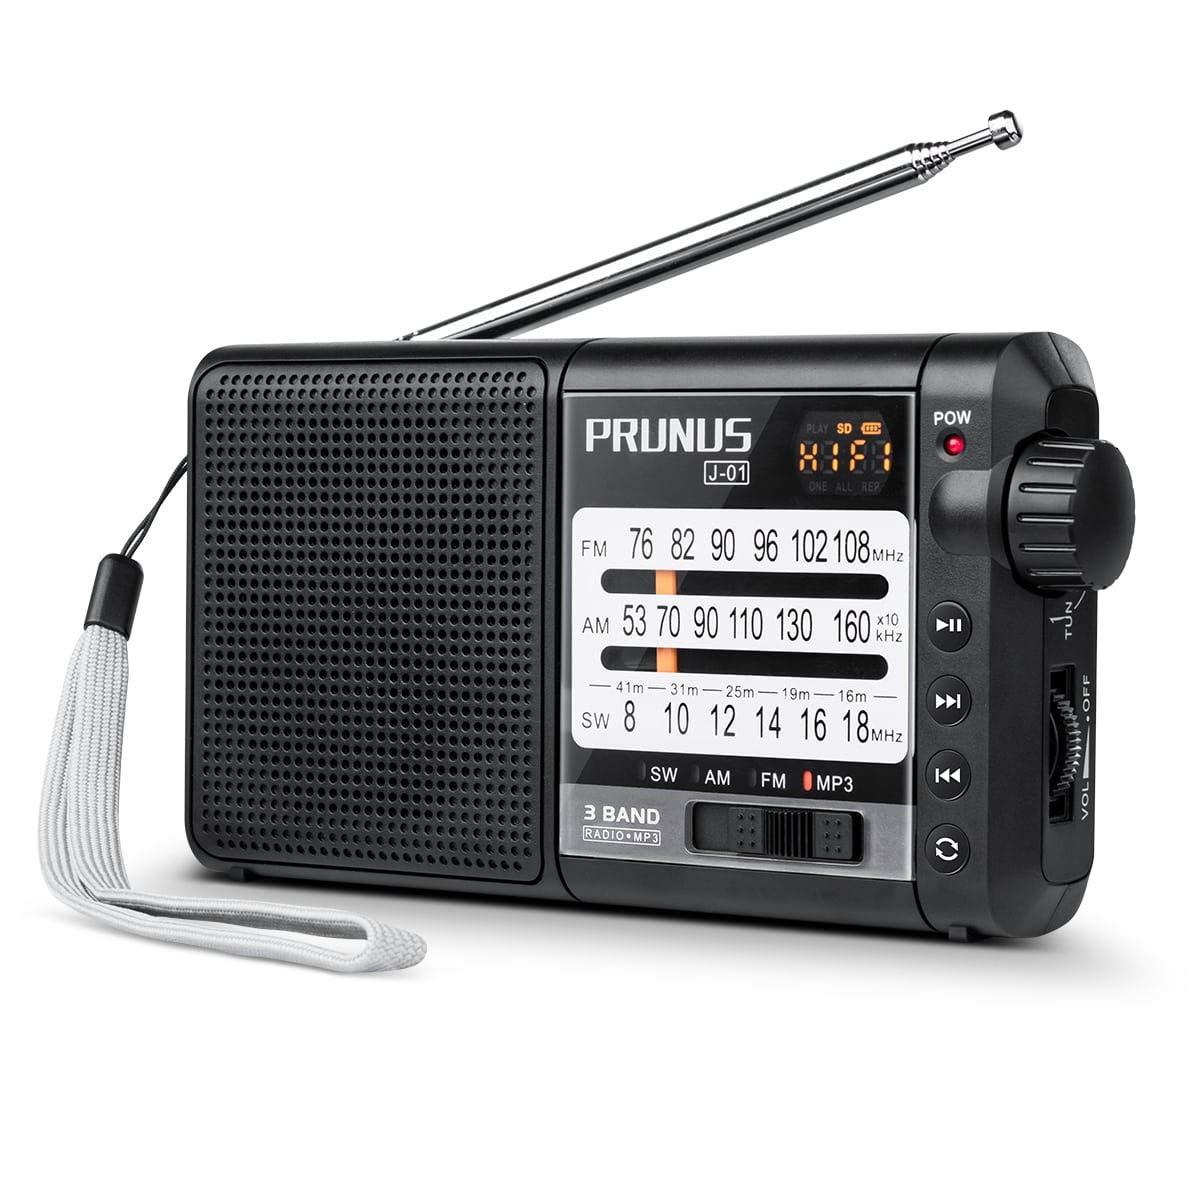 J01 Portable AM FM Shortwave Radio with Best Reception